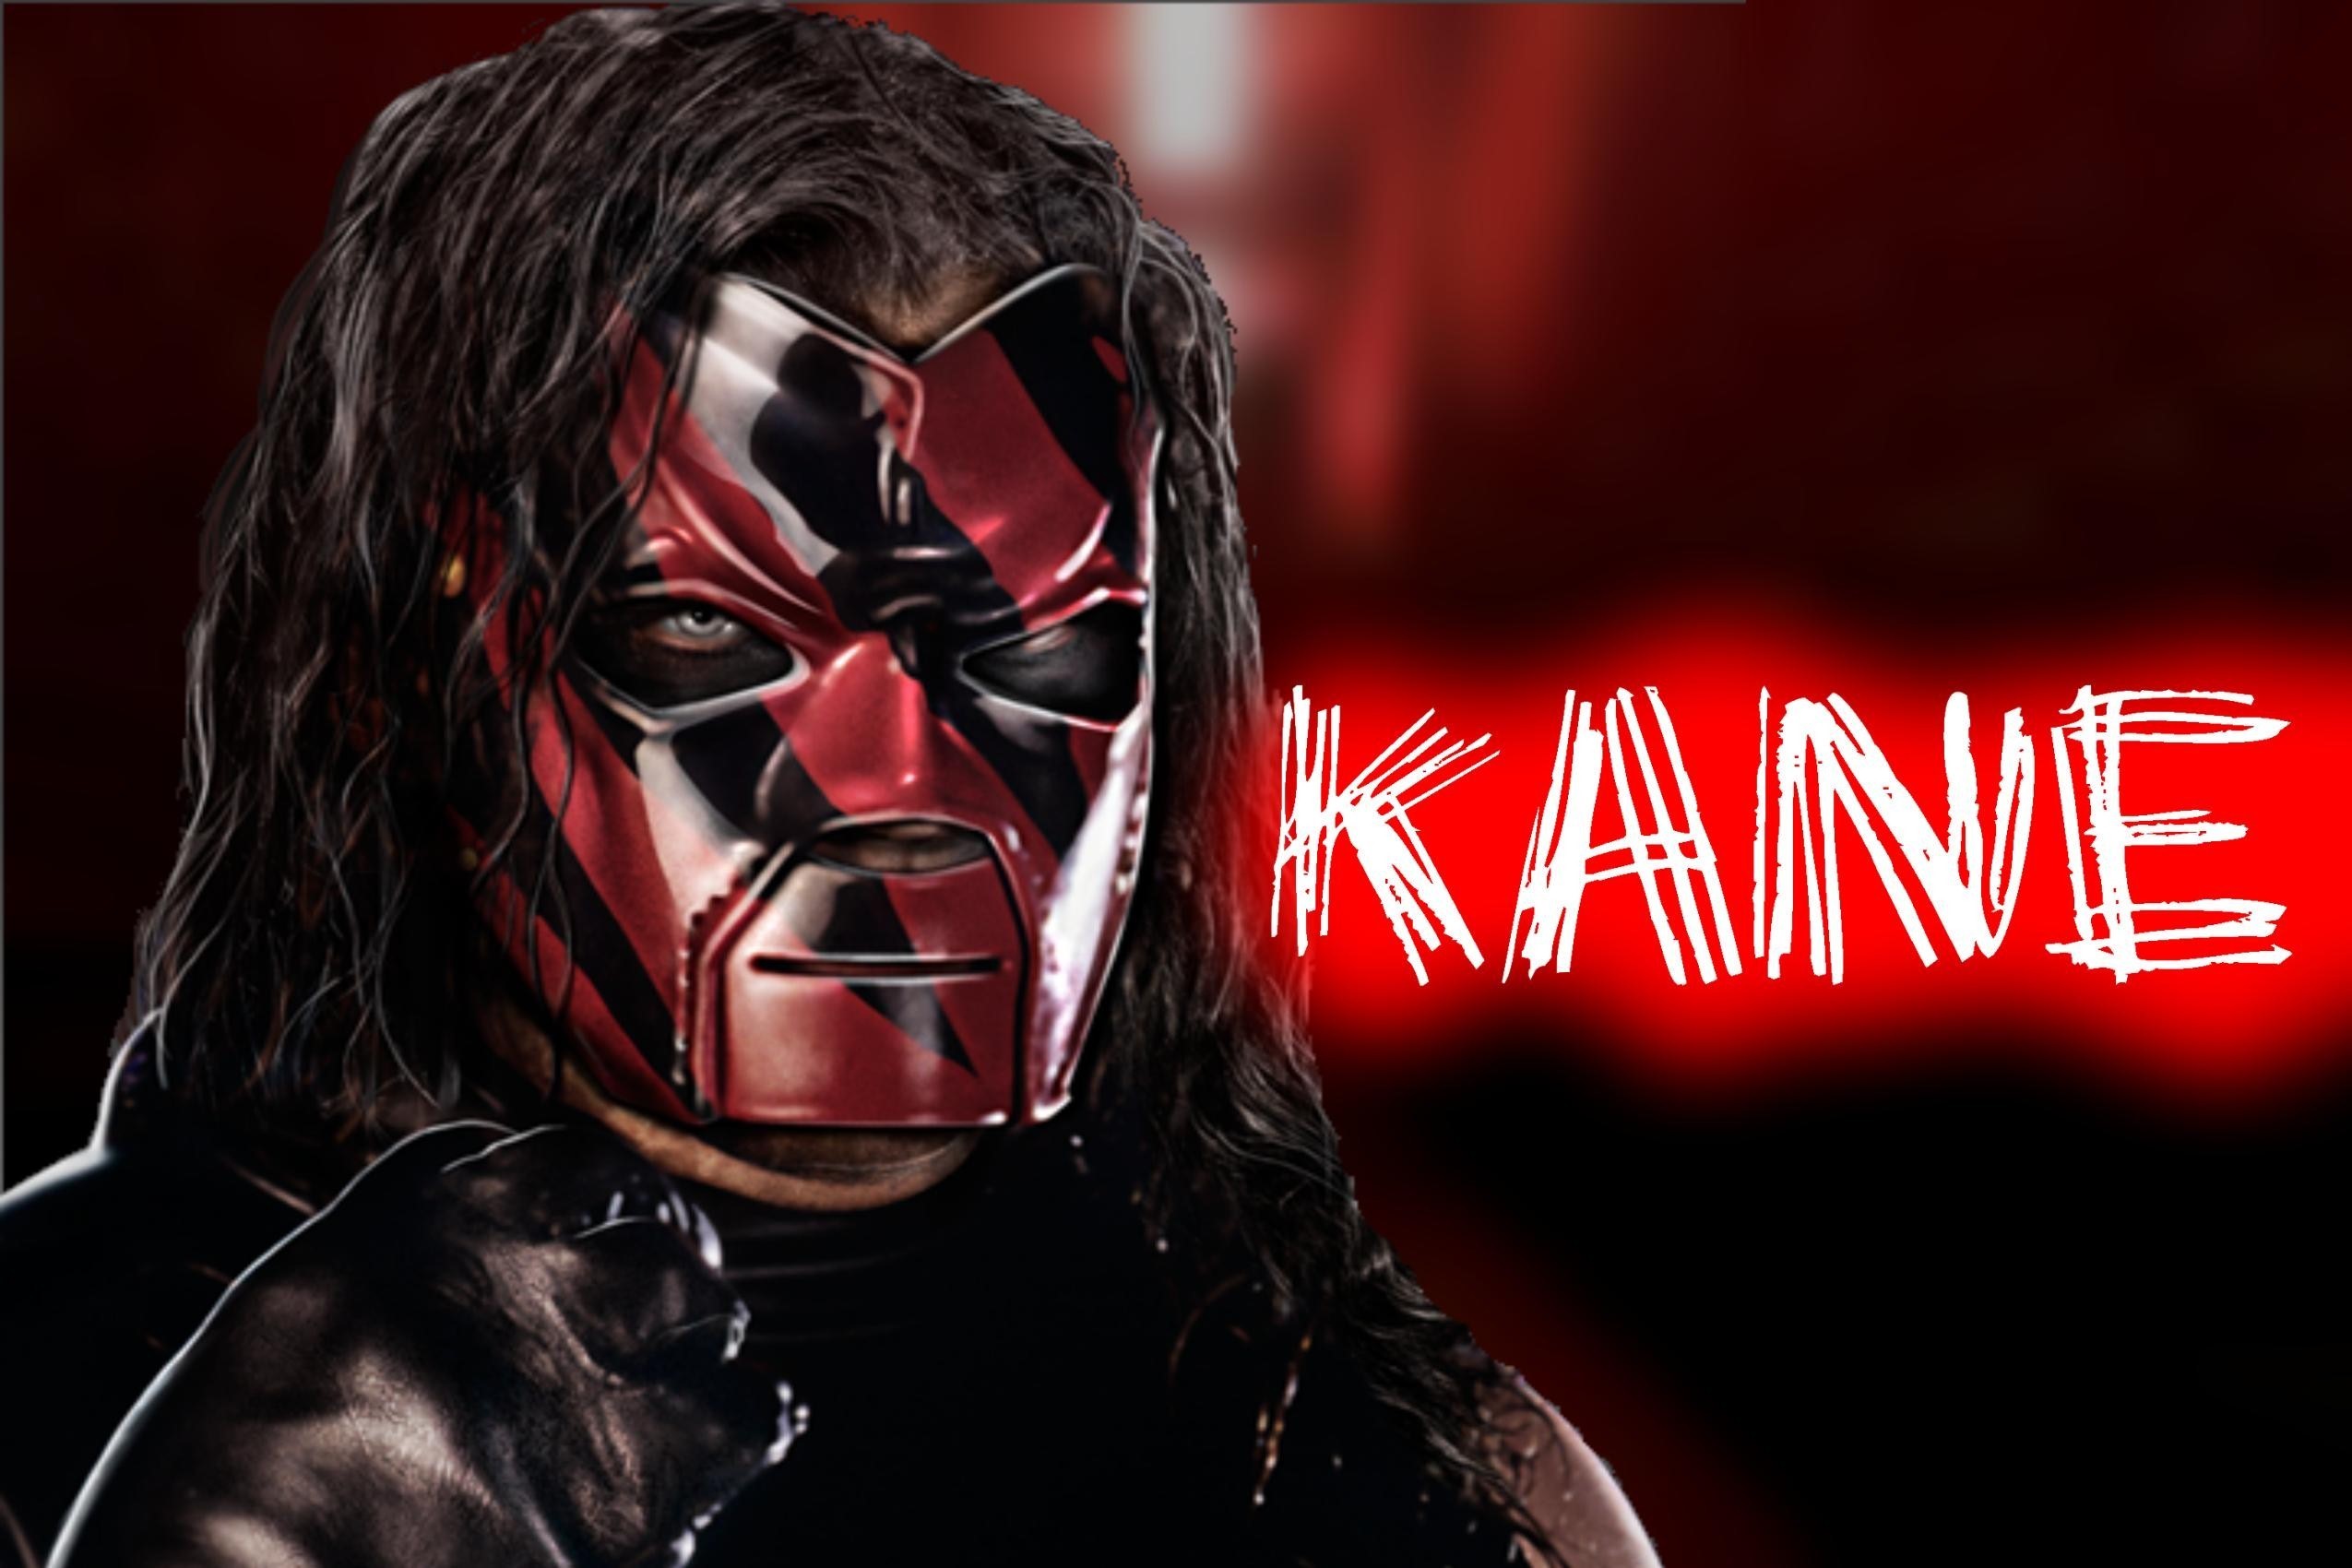 Kane Wrestler Quotes